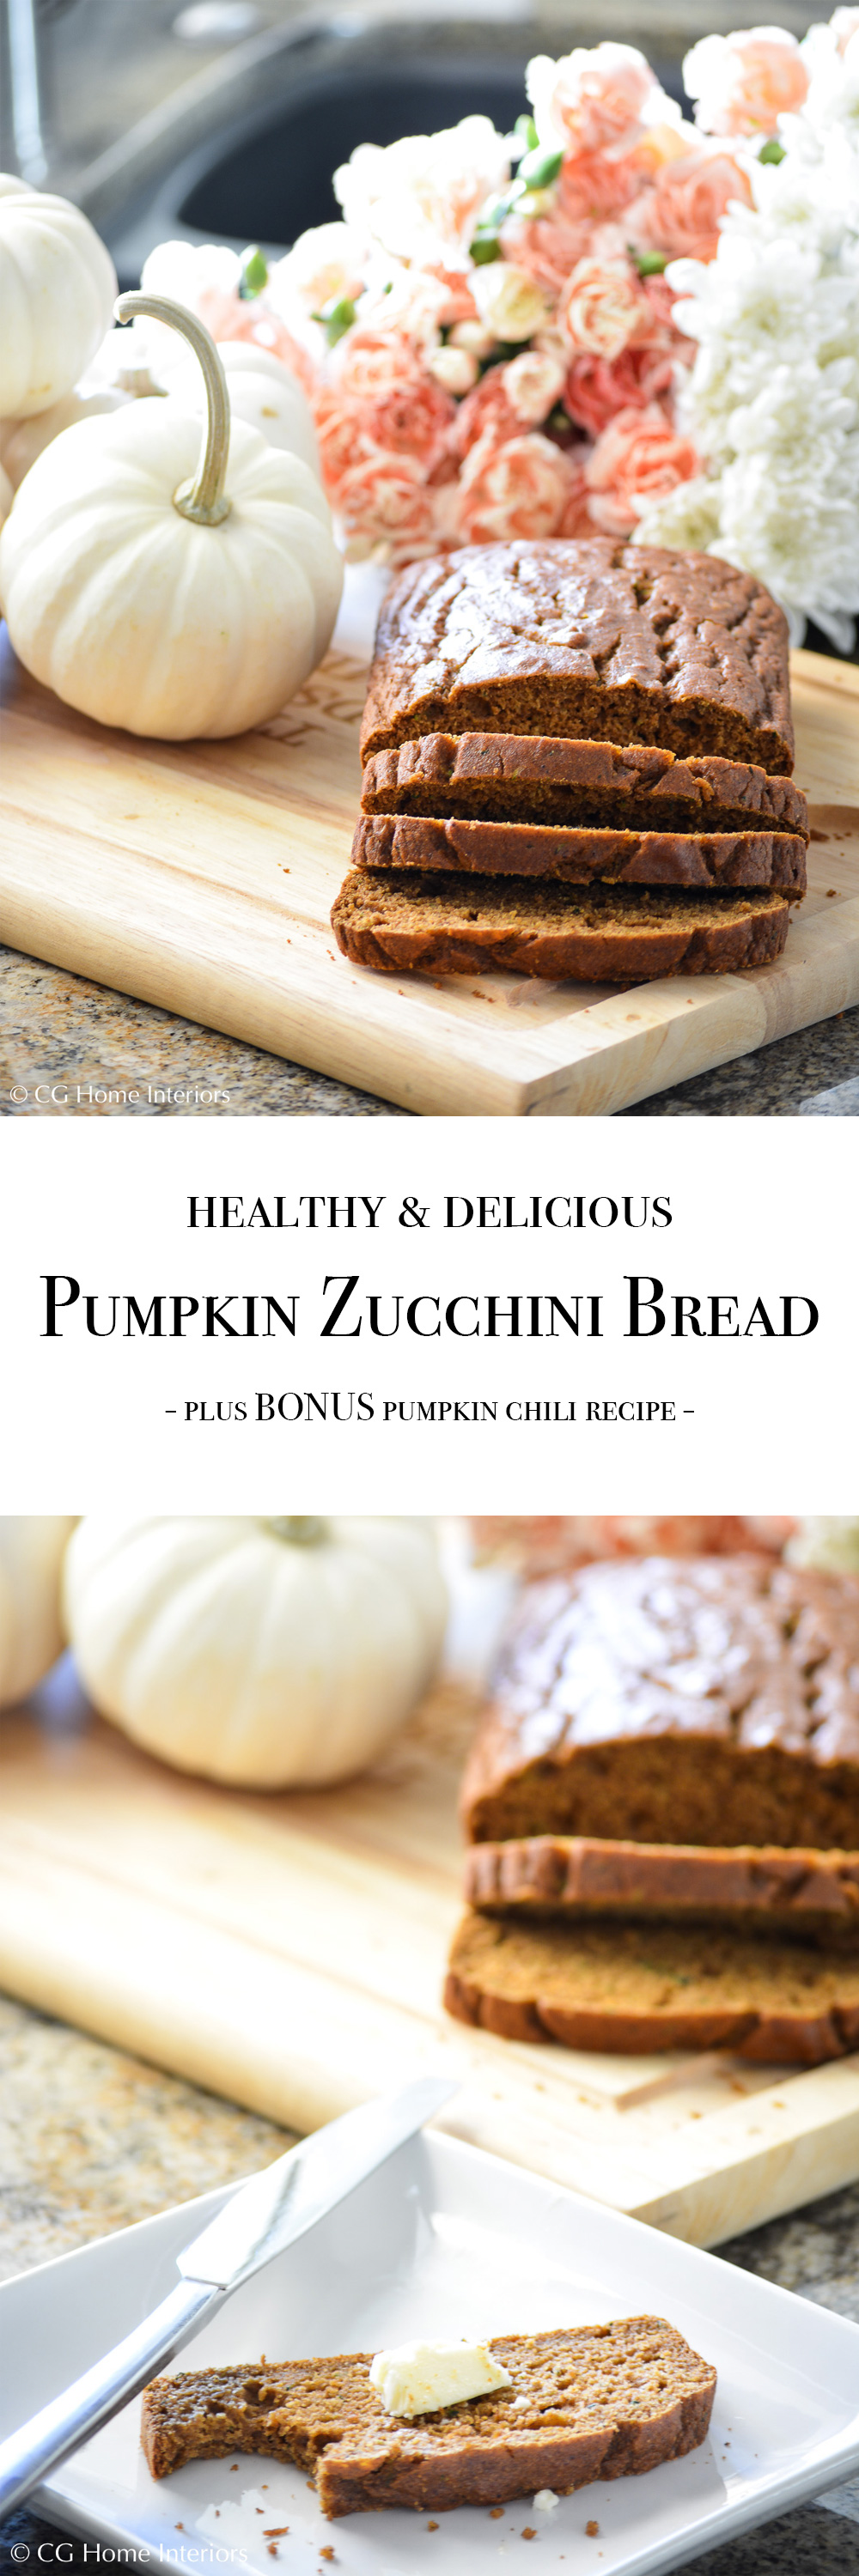 Healthy Pumpkin Zucchini Bread Pinterest Image